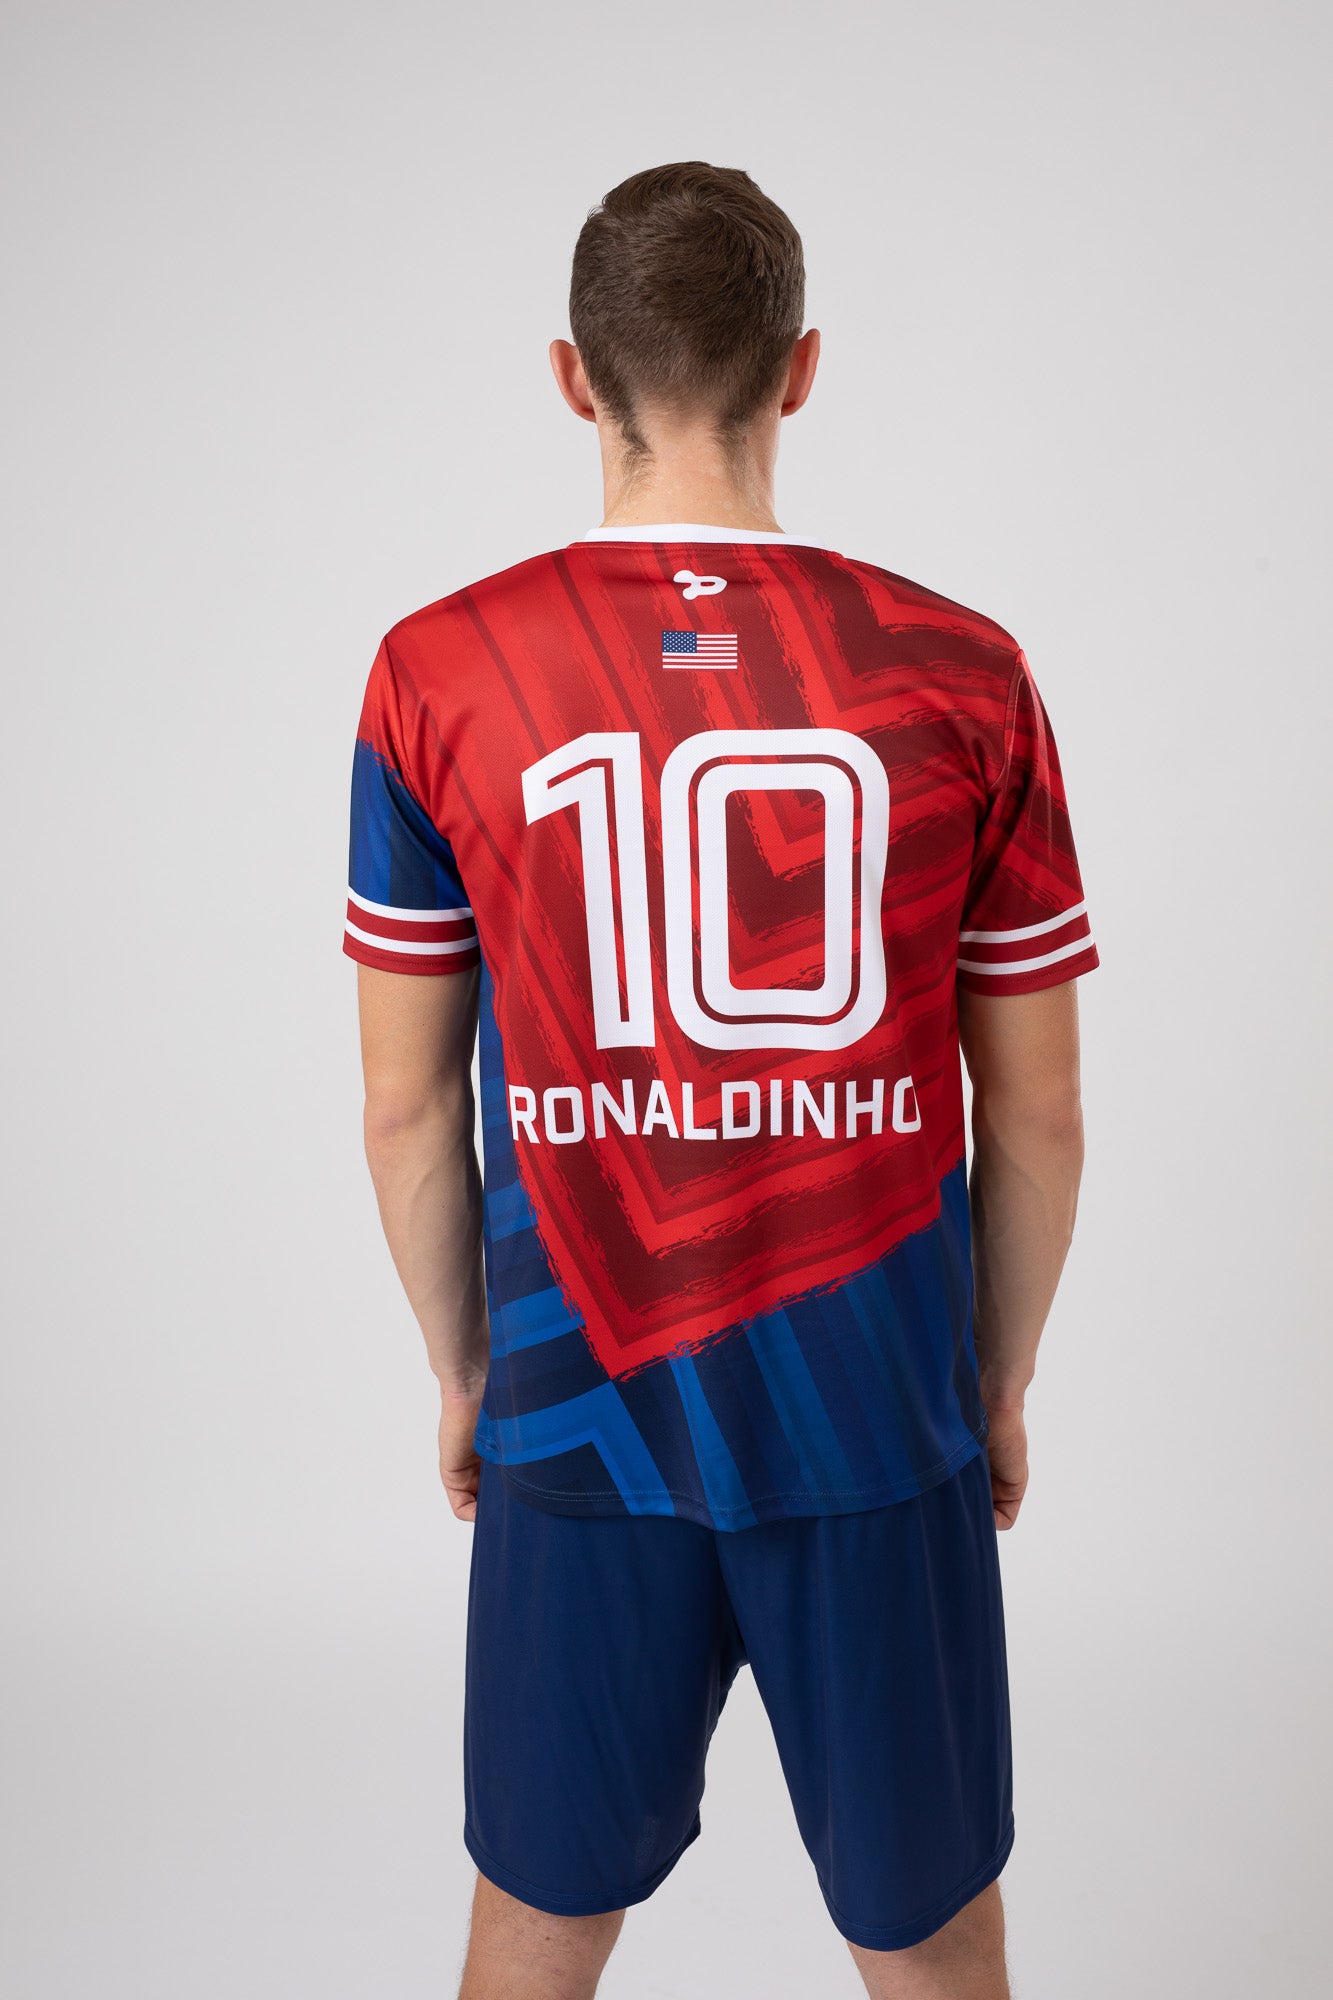 Ronaldinho USA Jersey/Camisa Replica